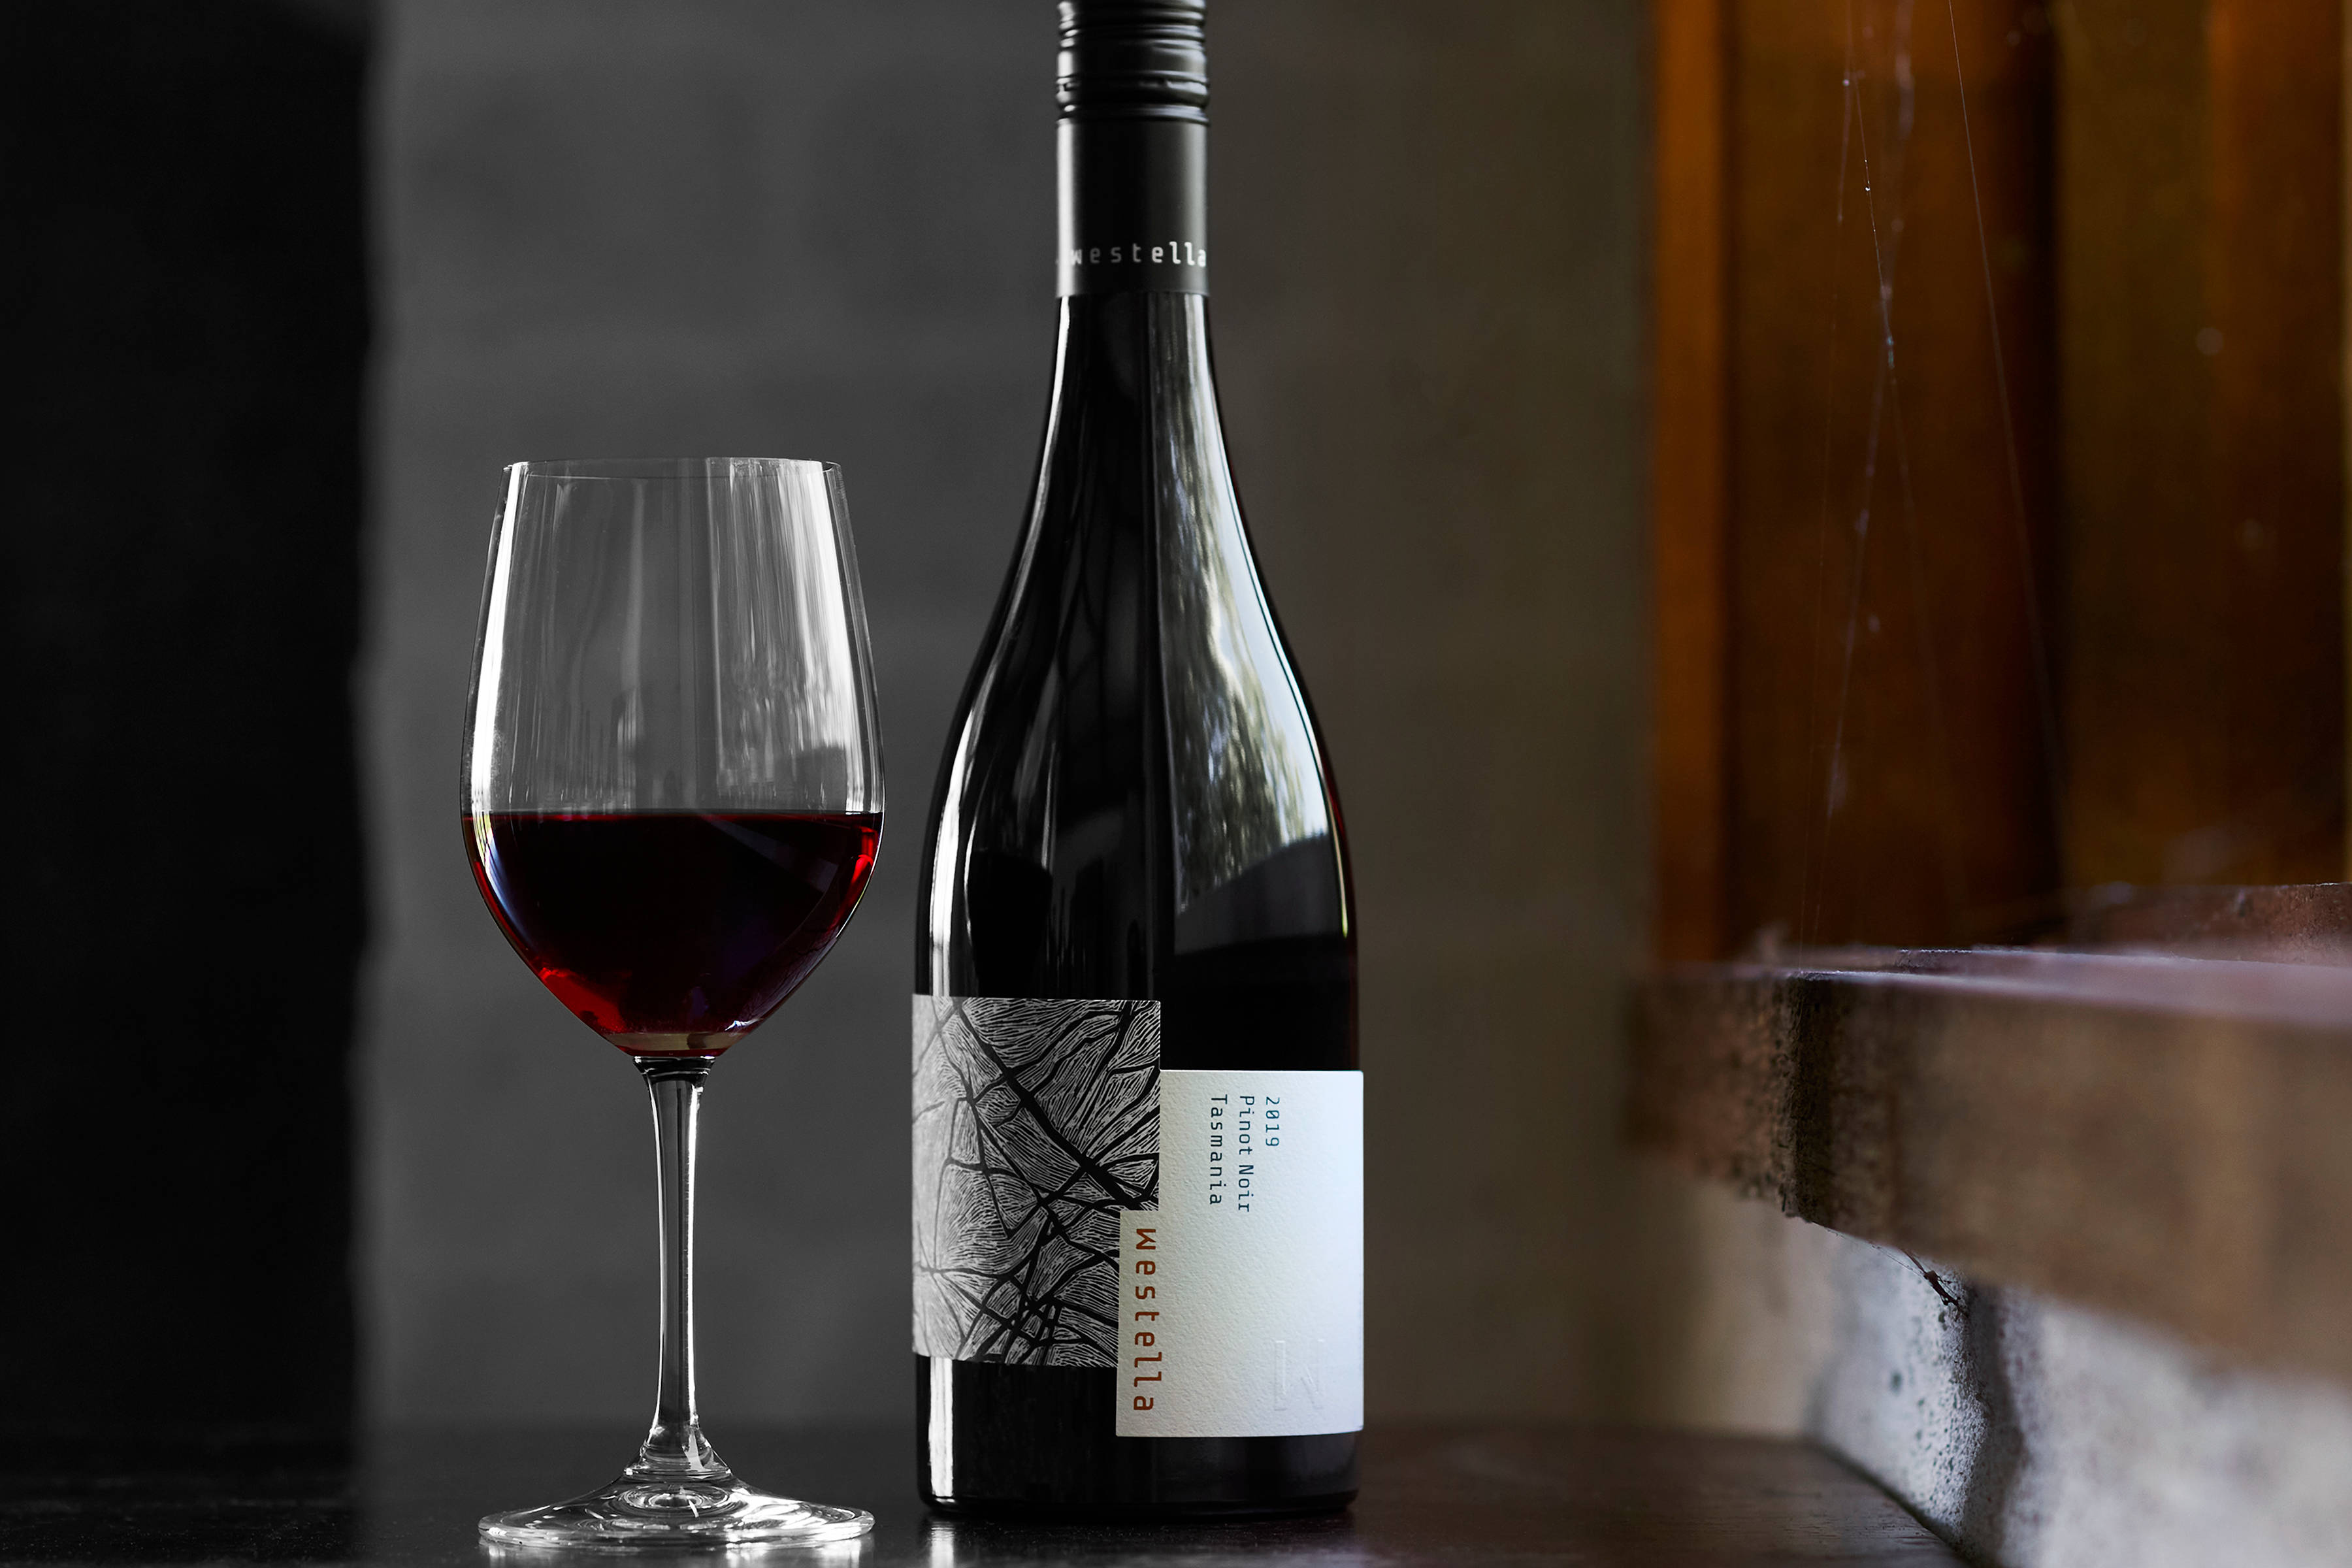 Glass of Pinot Noir and bottle of Westella’s 2019 Pinot Noir. Photo: Renee Hodskiss.